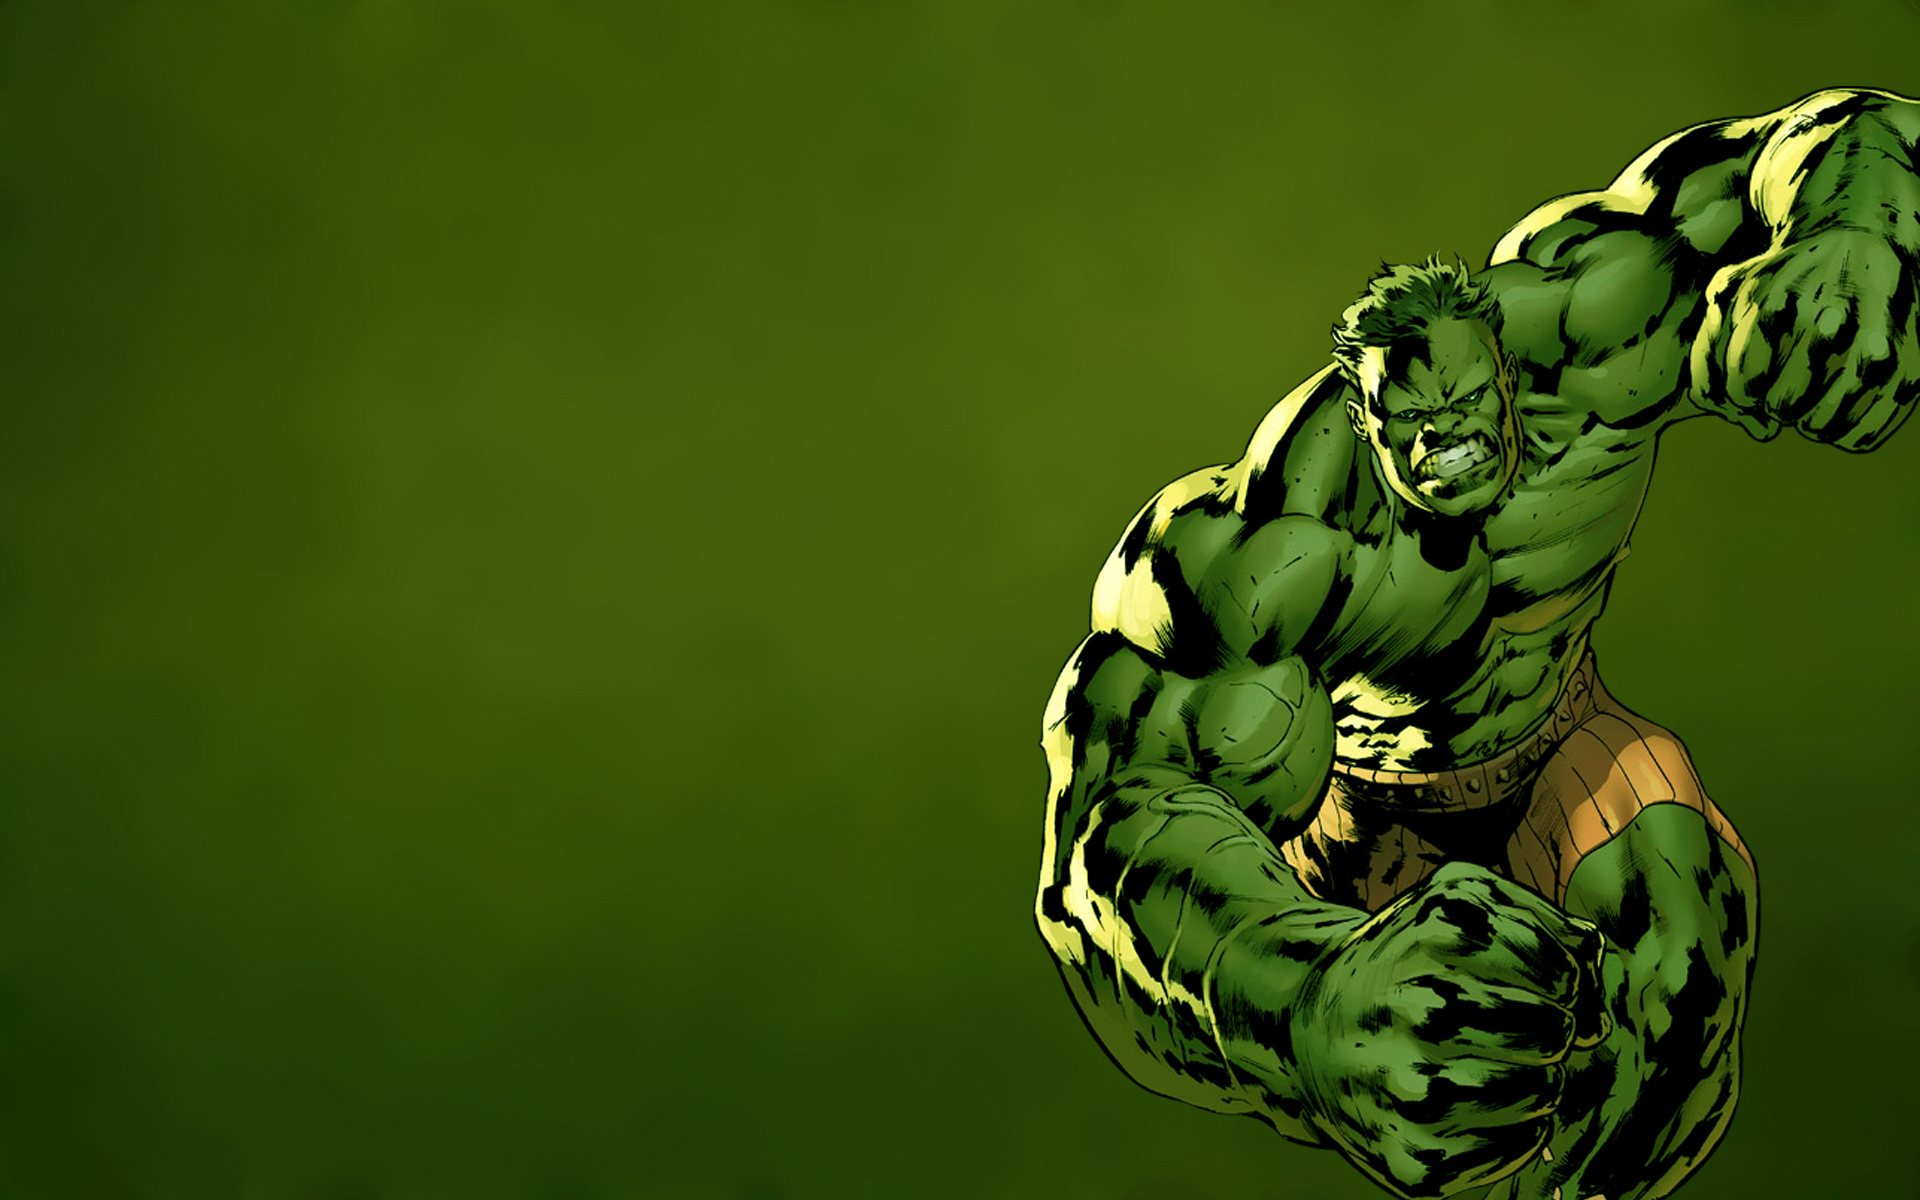 Incredible hulk backgrounds for desktop.